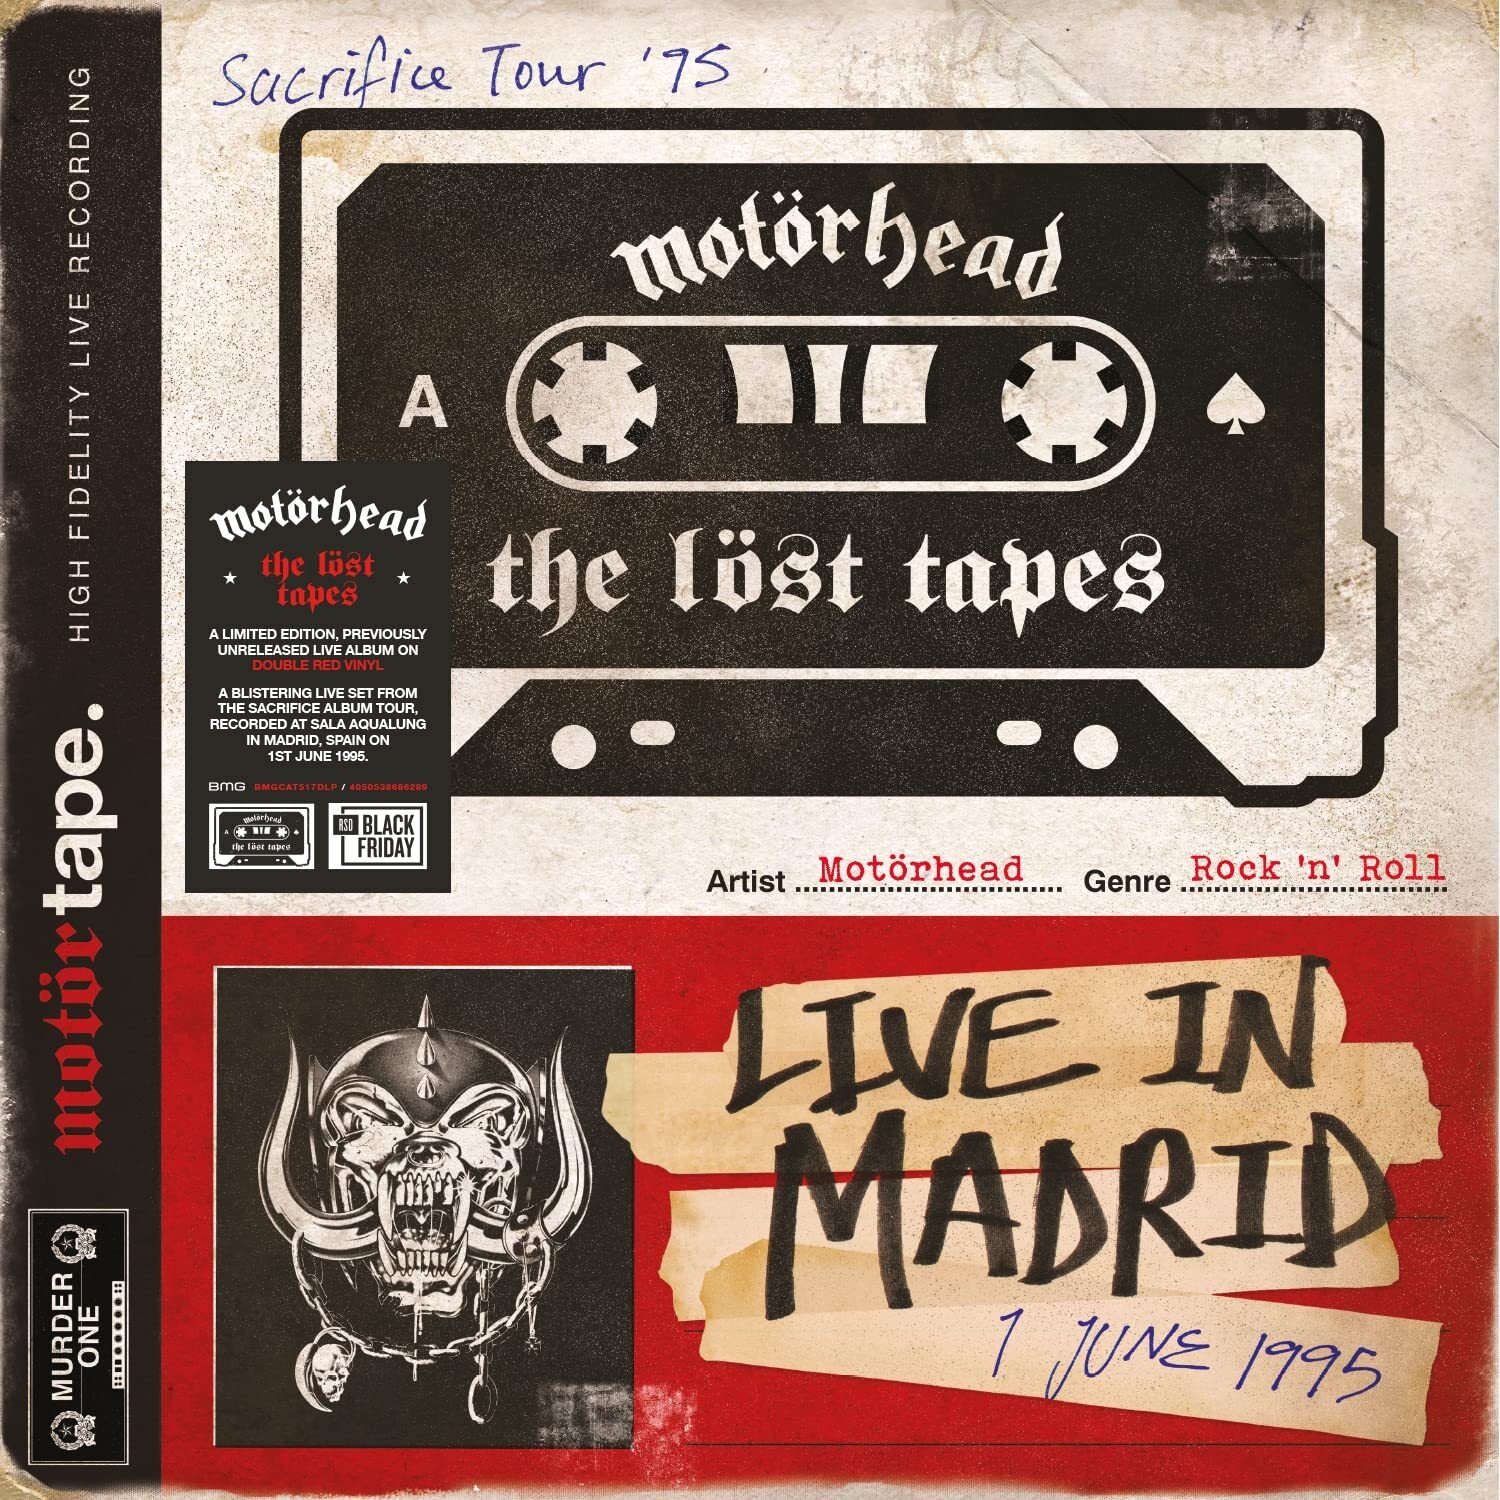 Виниловая Пластинка Motorhead The Lost Tapes Vol. 1 (Live In Madrid 1 June 1995) (4050538686289) виниловая пластинка motorhead the lost tapes vol 1 live in madrid 1 june 1995 4050538686289